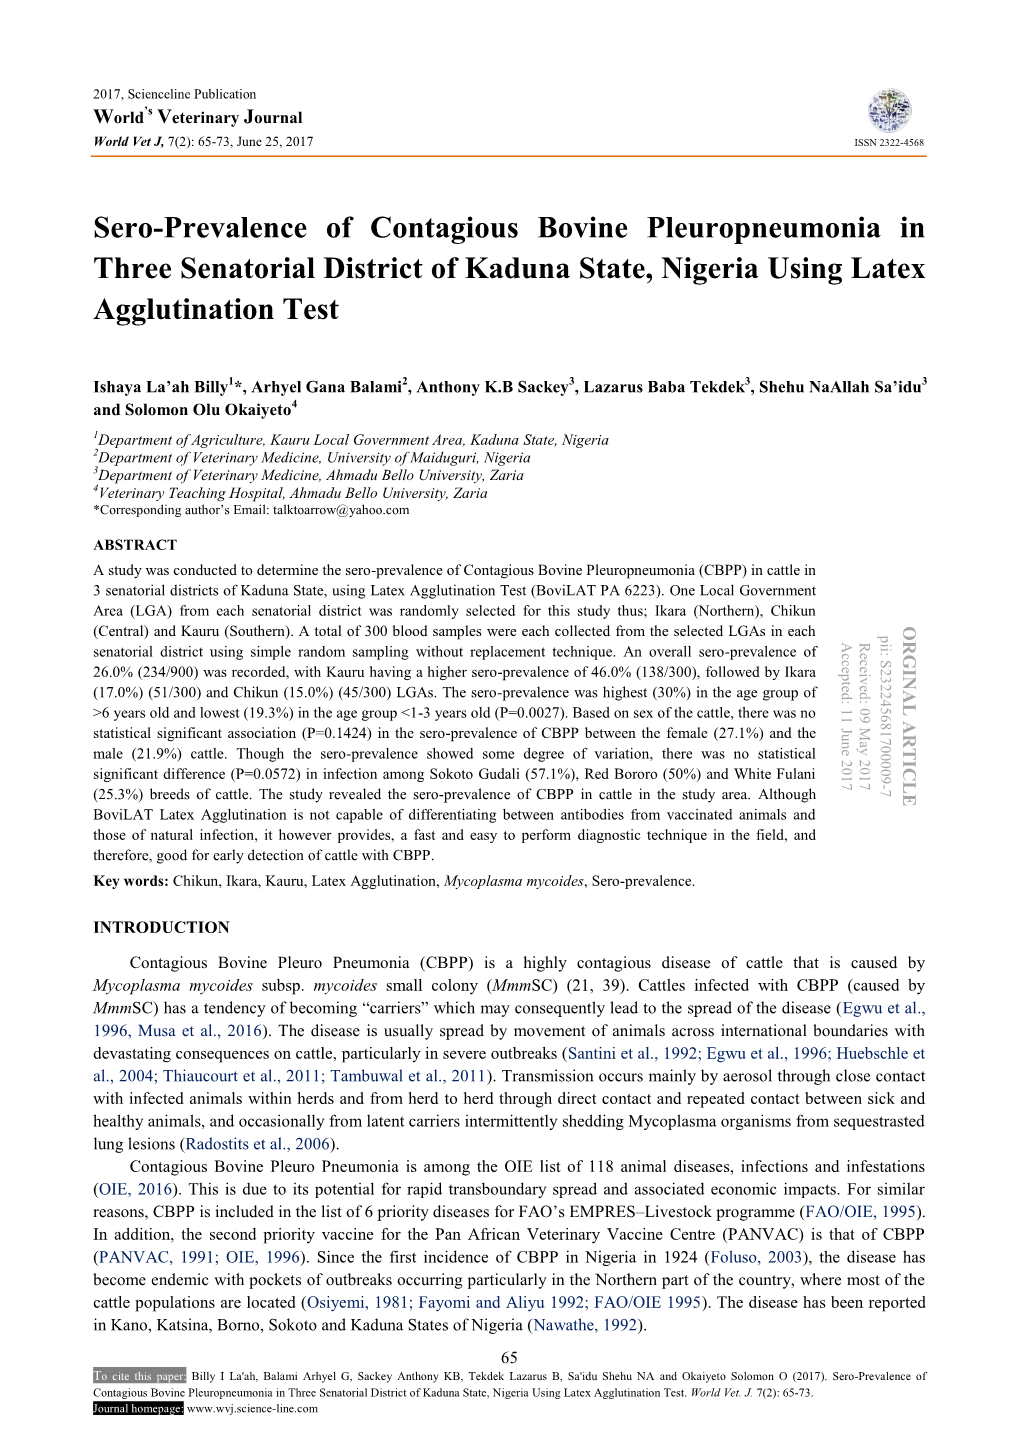 Sero-Prevalence of Contagious Bovine Pleuropneumonia in Three Senatorial District of Kaduna State, Nigeria Using Latex Agglutination Test